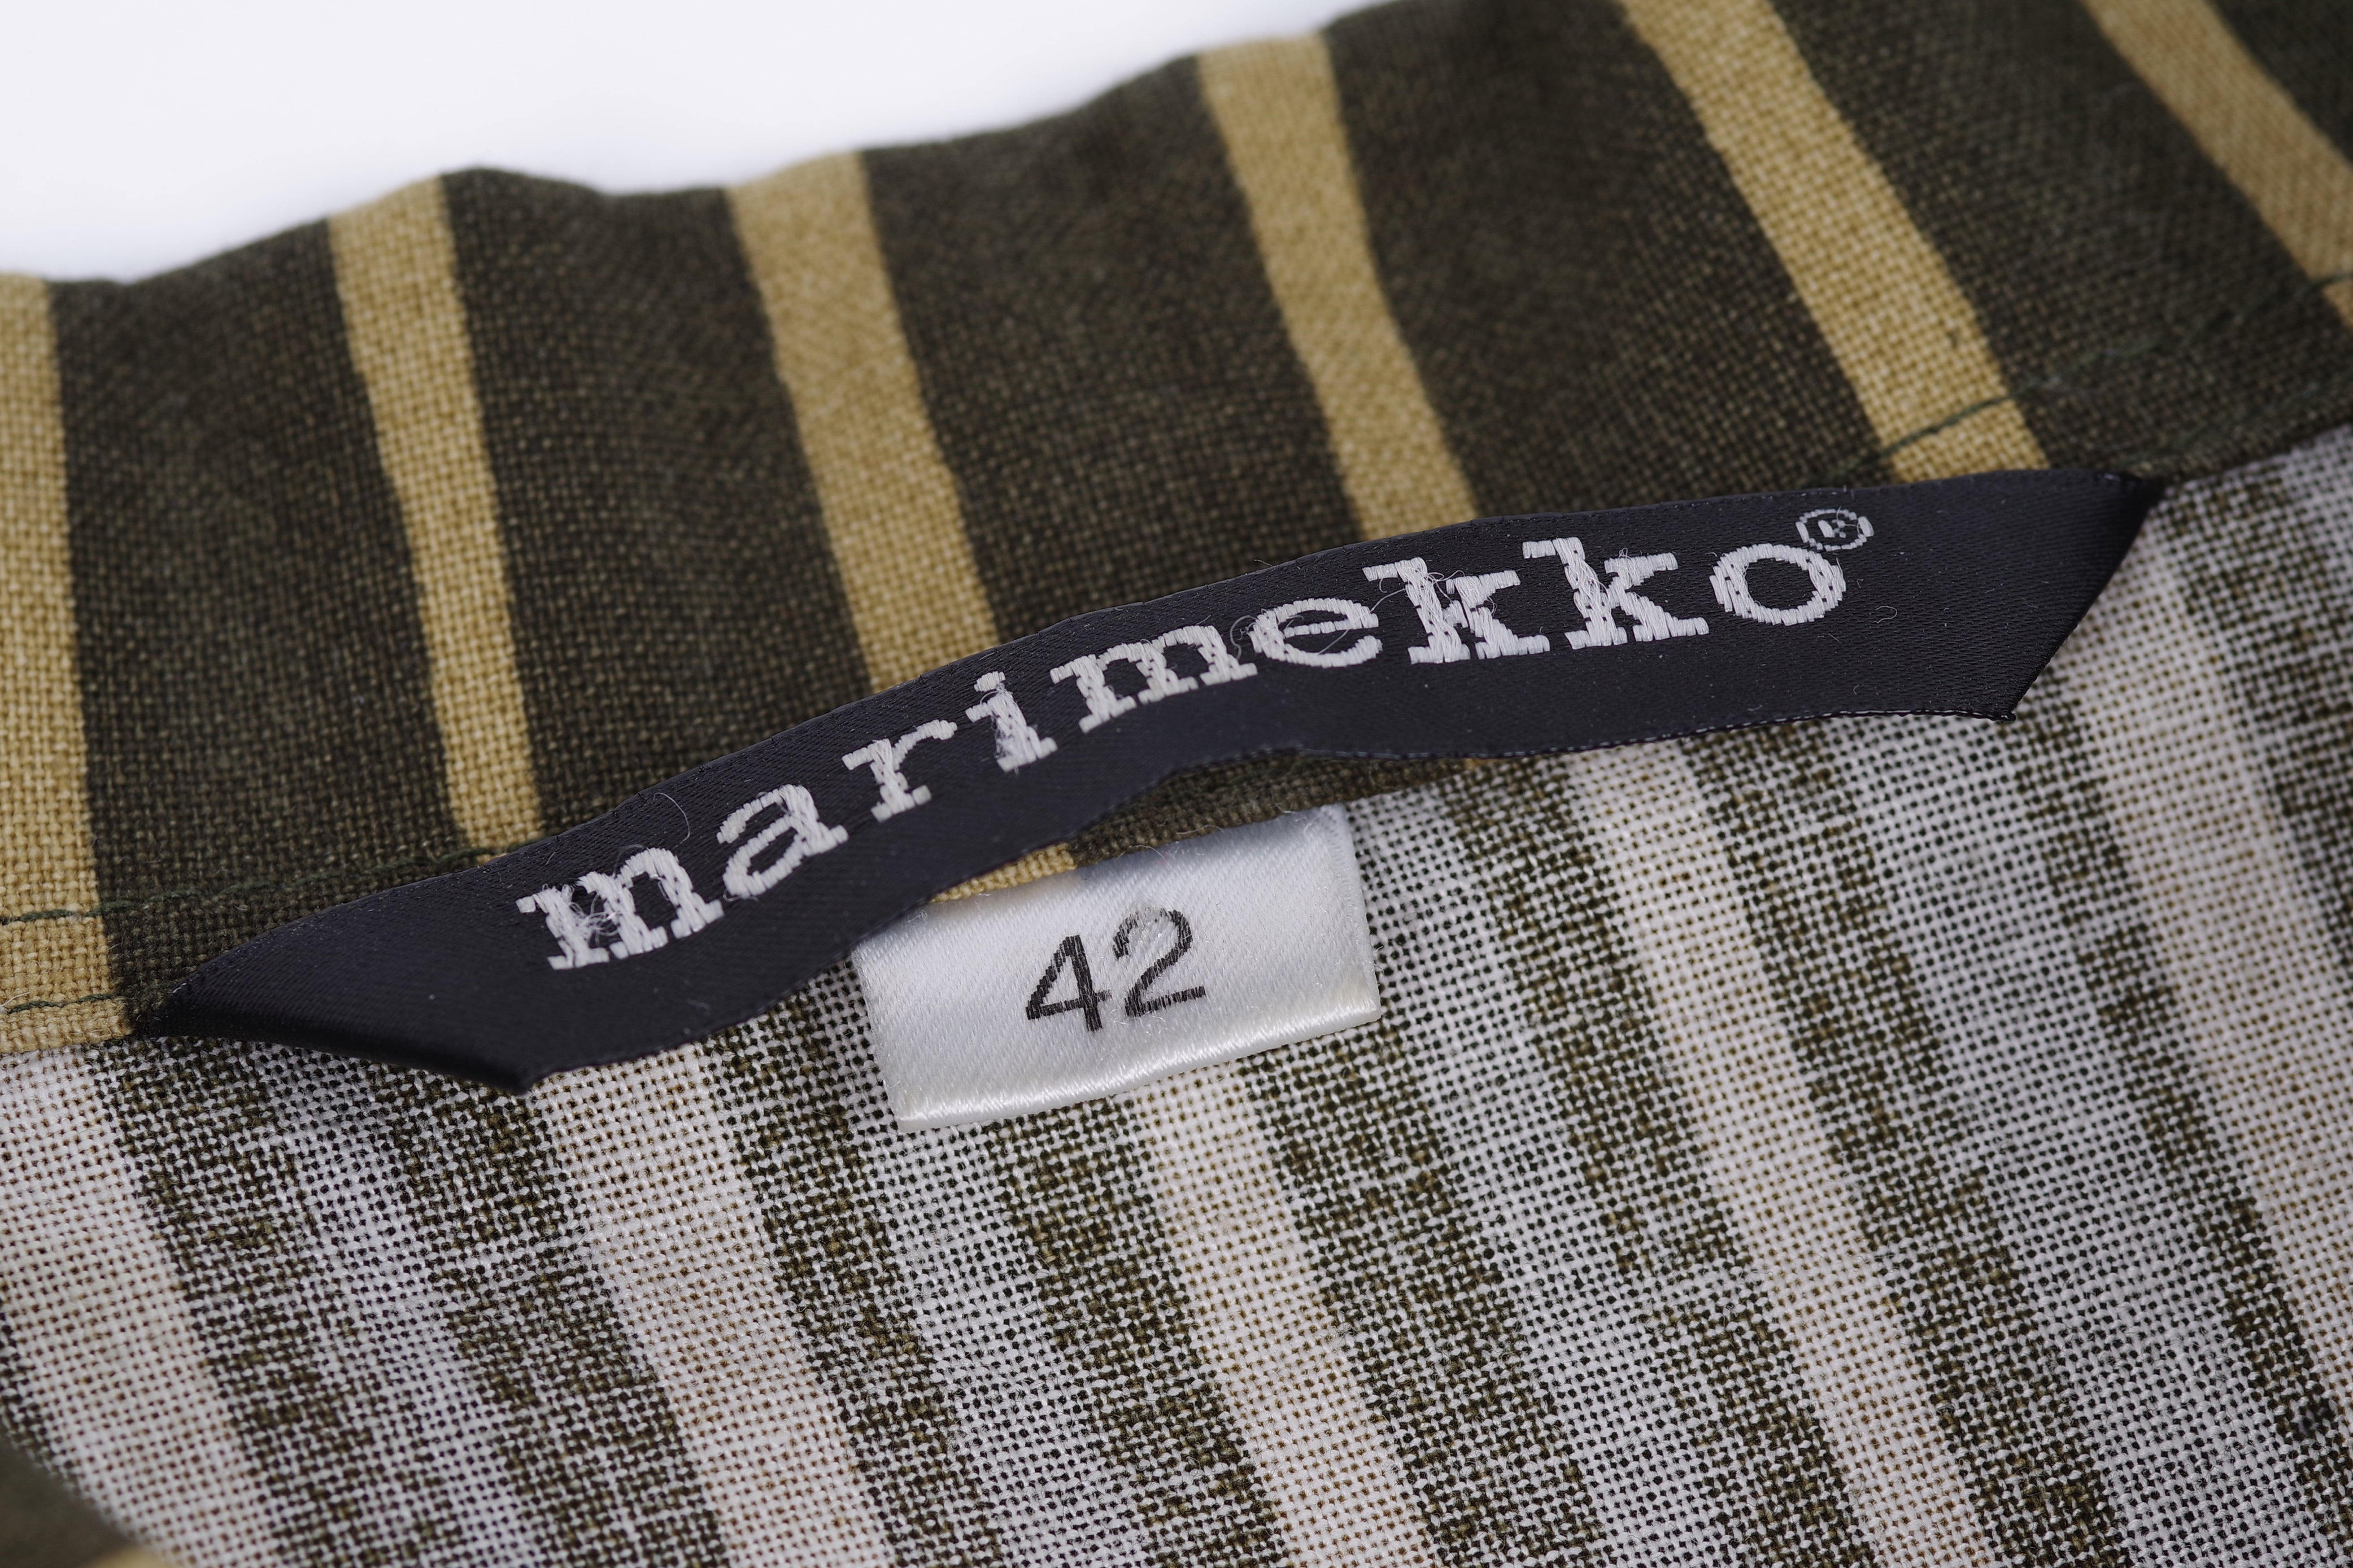 Marimekko Jokapoika Striped Green Shirt, Size 42 (Men's L)